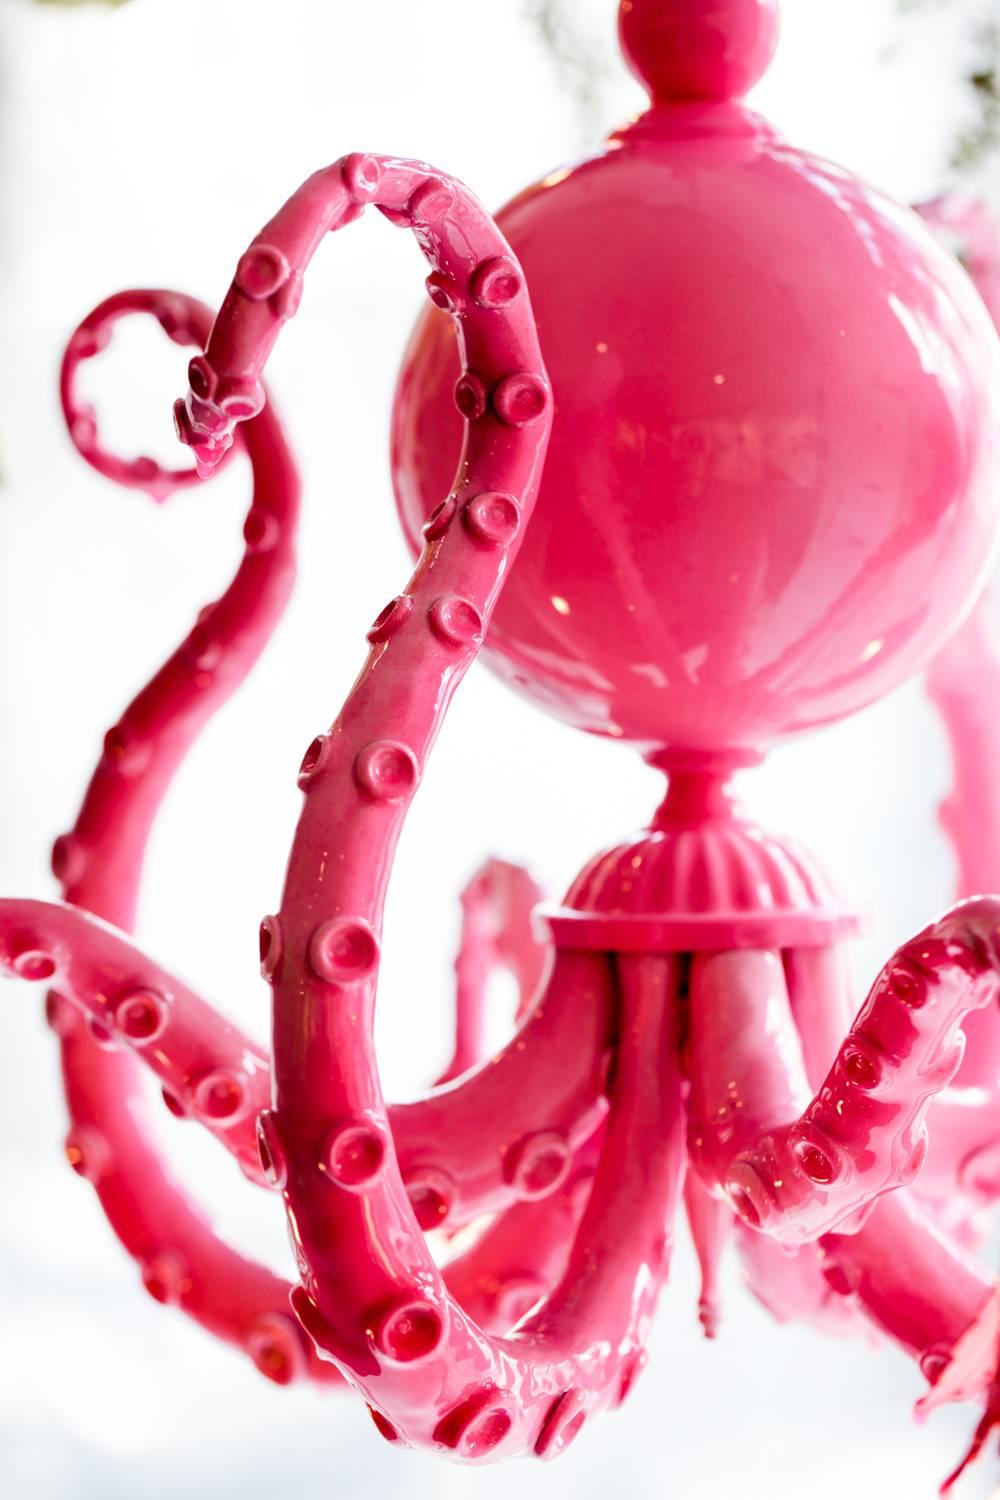 adam wallacavage octopus chandelier